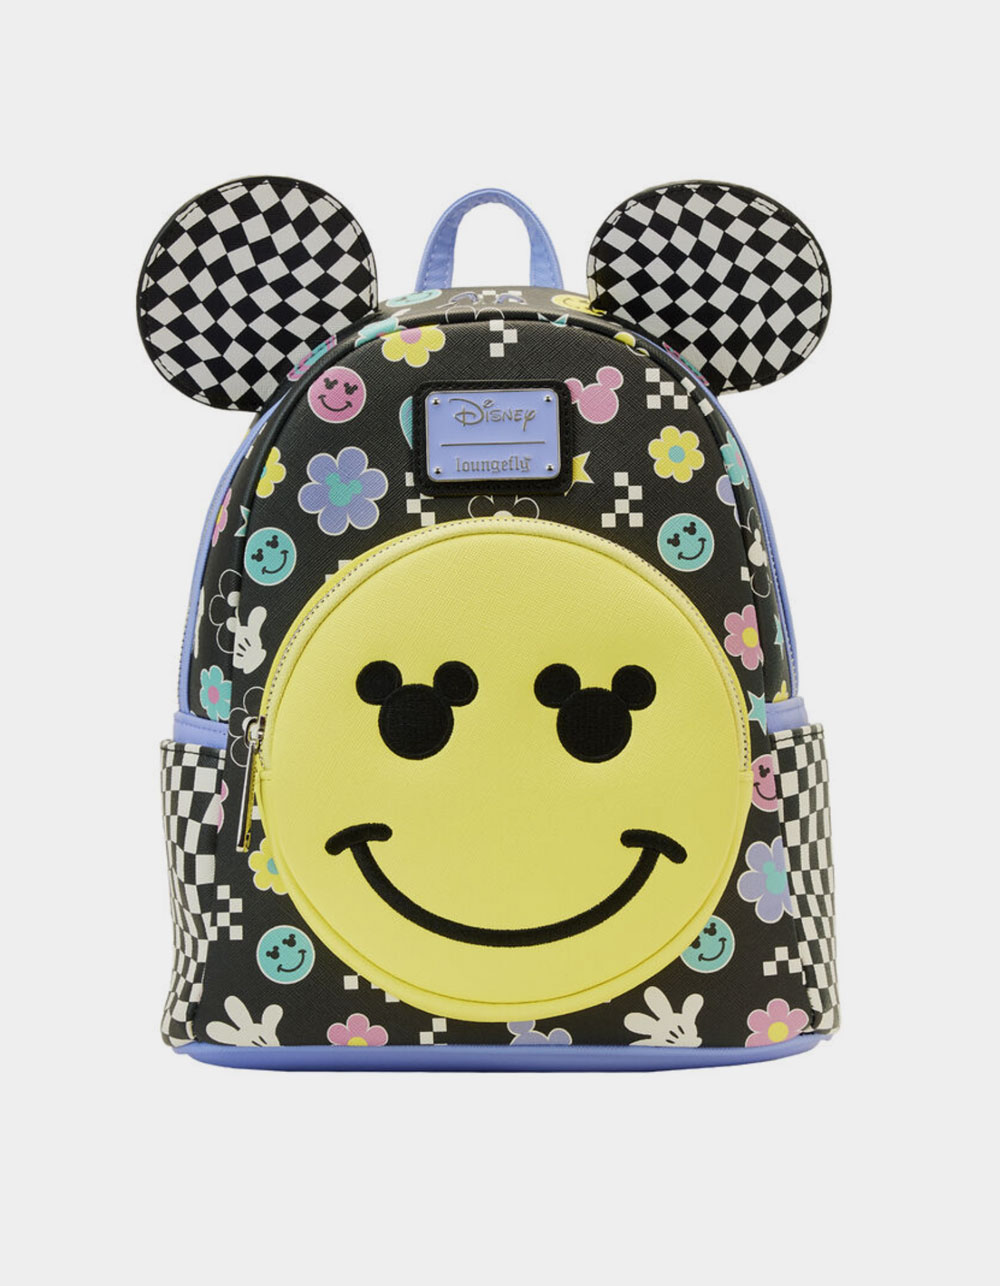 Disney x Loungefly Mini Backpack plandetransformacion.unirioja.es